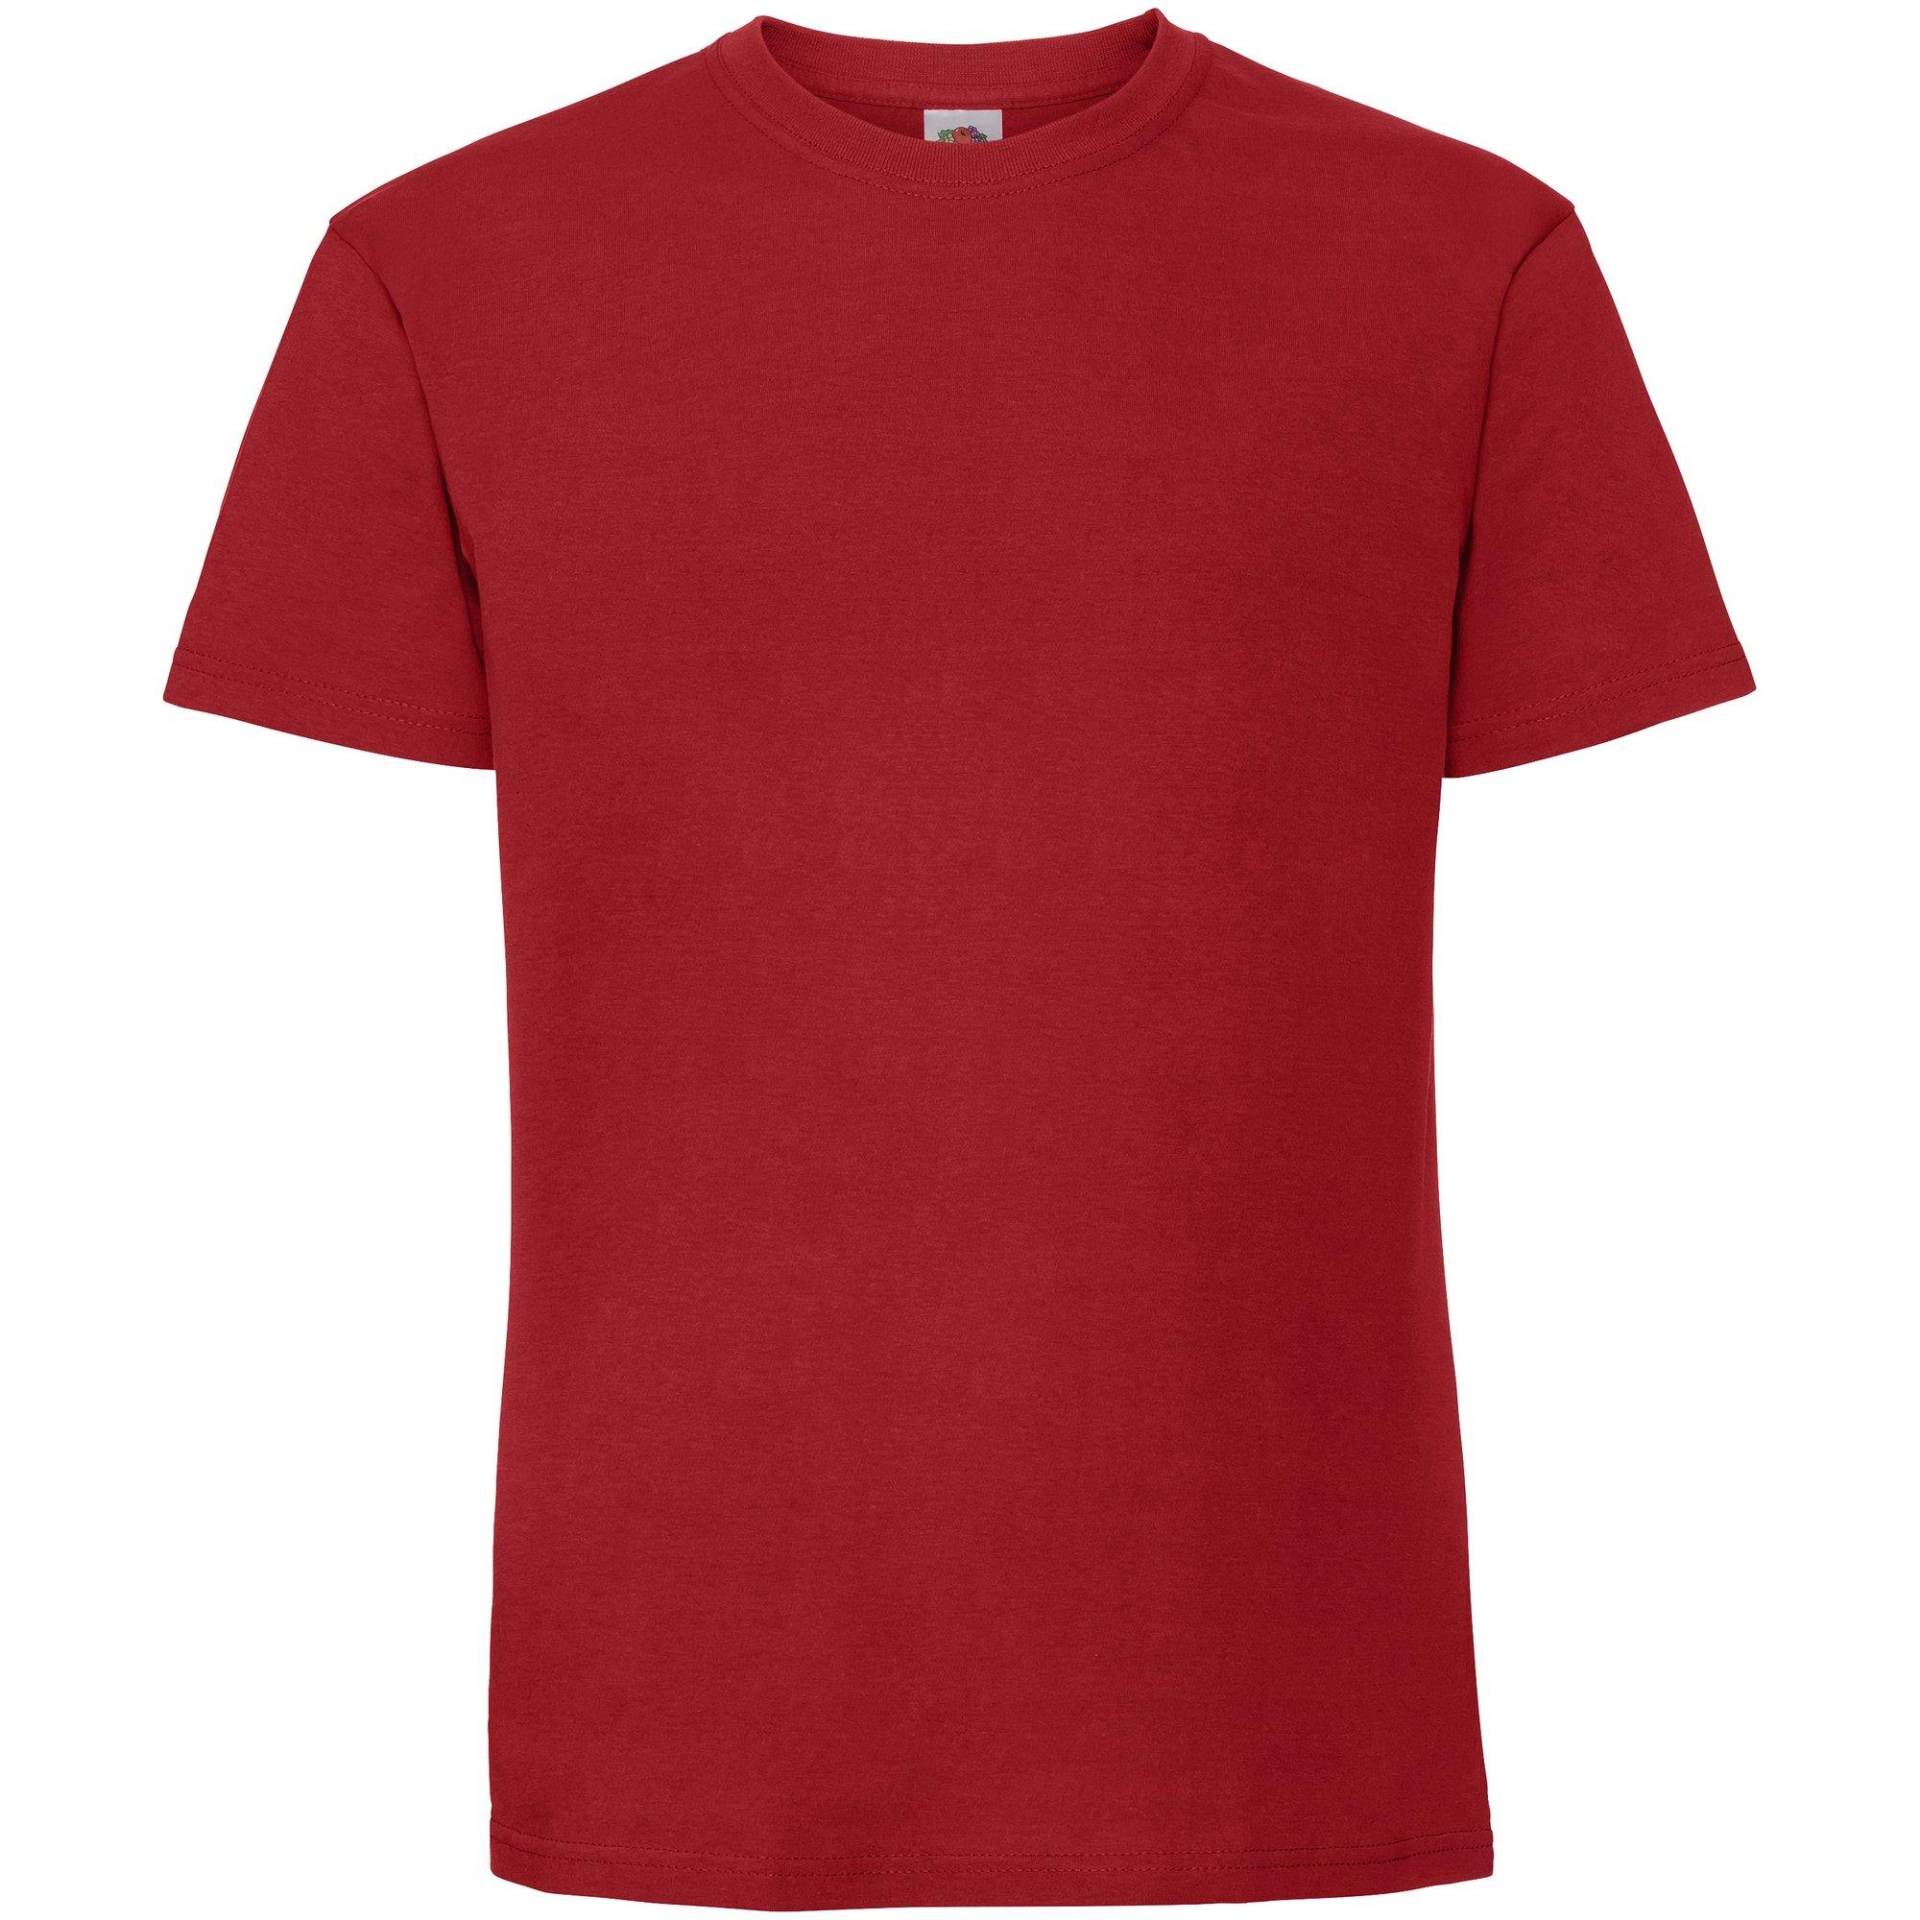 Premium Tshirt Damen Rot Bunt S von Fruit of the Loom